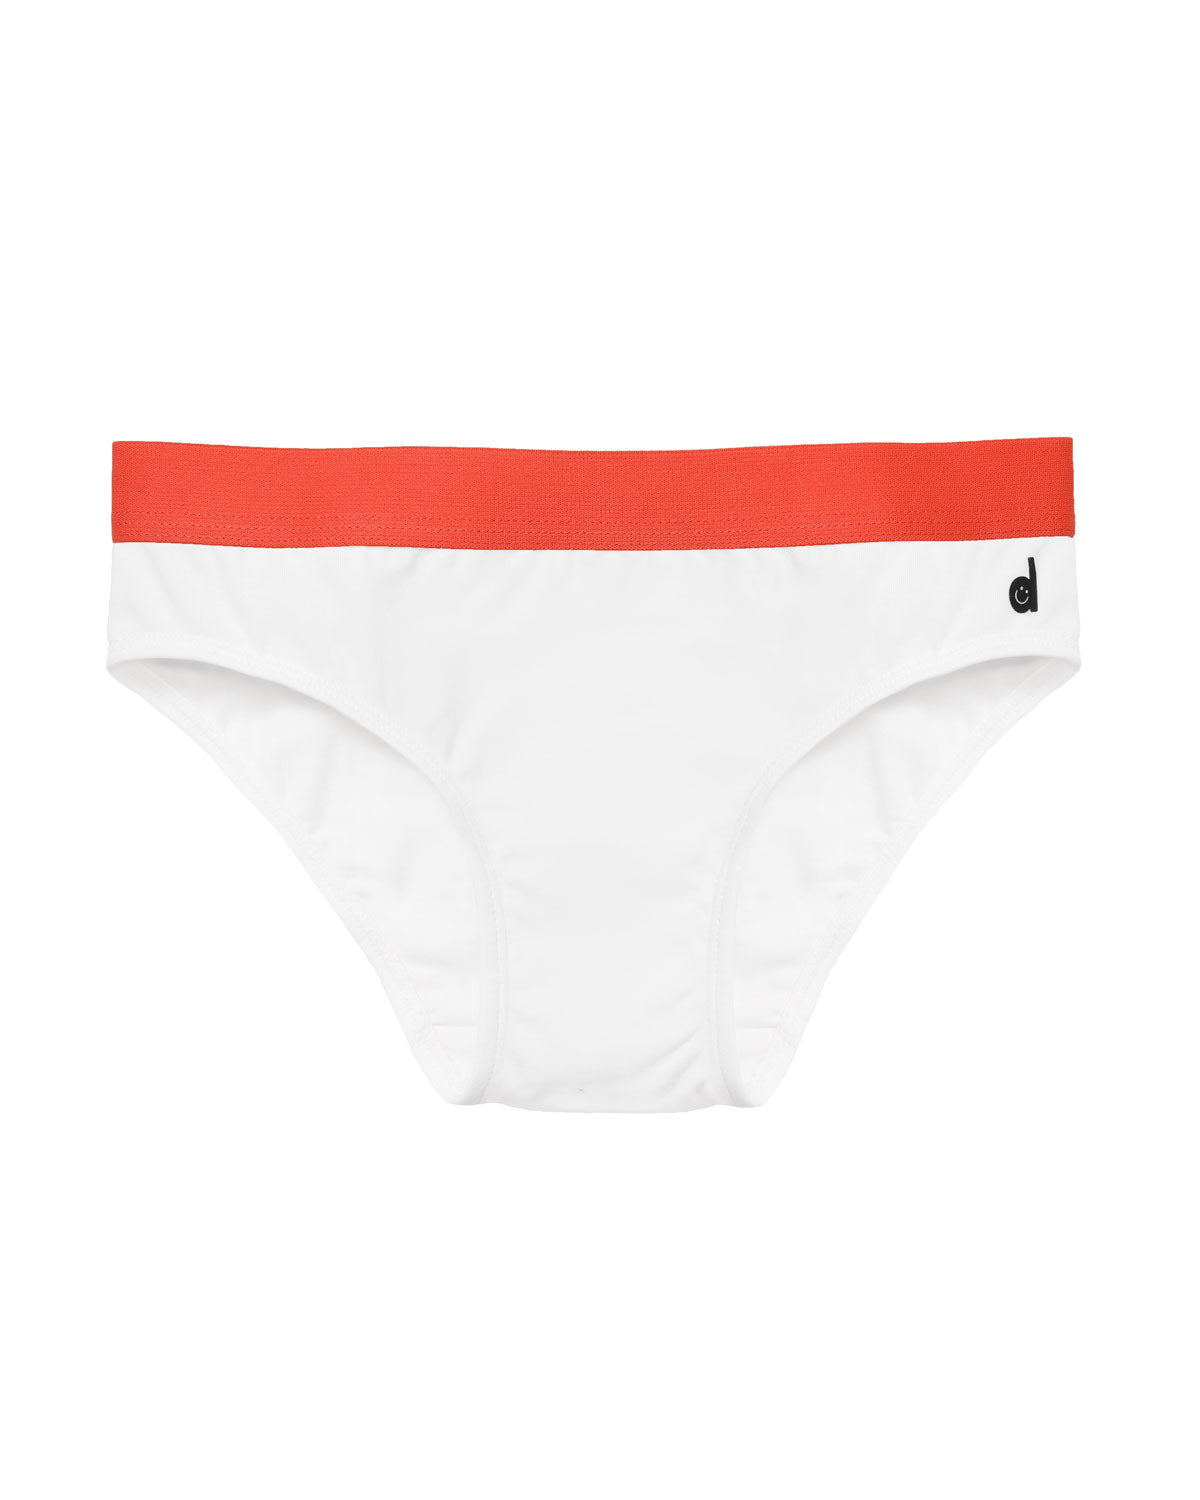 Red & White Striped Panties 